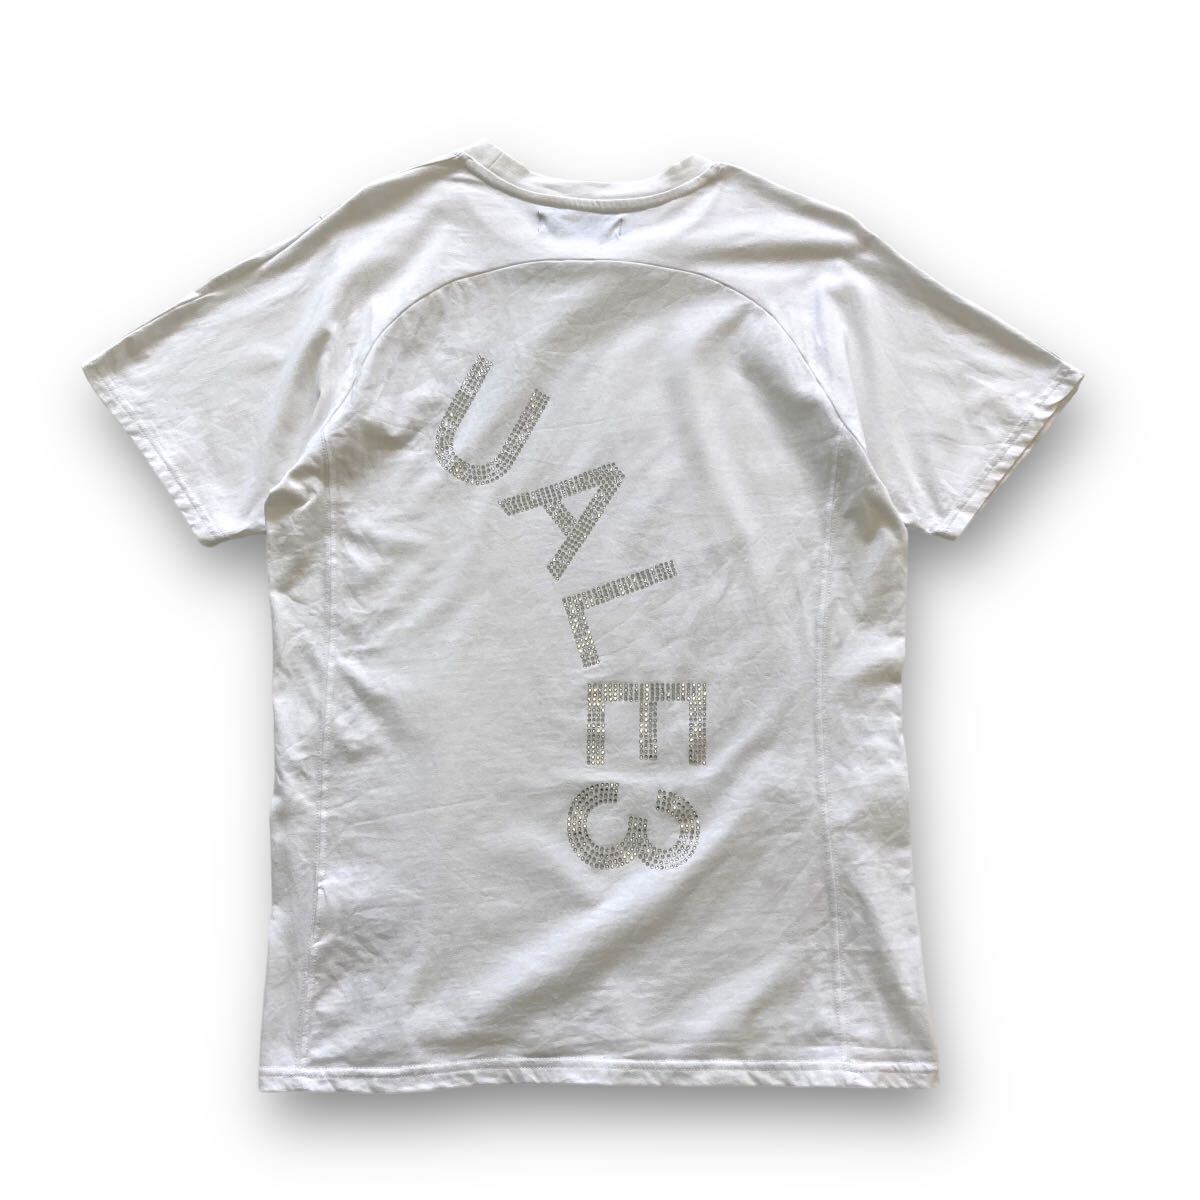 【1PIU1UGUALE3 RELAX】ウノピュウノウグァーレトレリラックス ストーンロゴ 半袖Tシャツ tシャツ ワンポイント刺繍ロゴ 白 ホワイト (L)_画像8